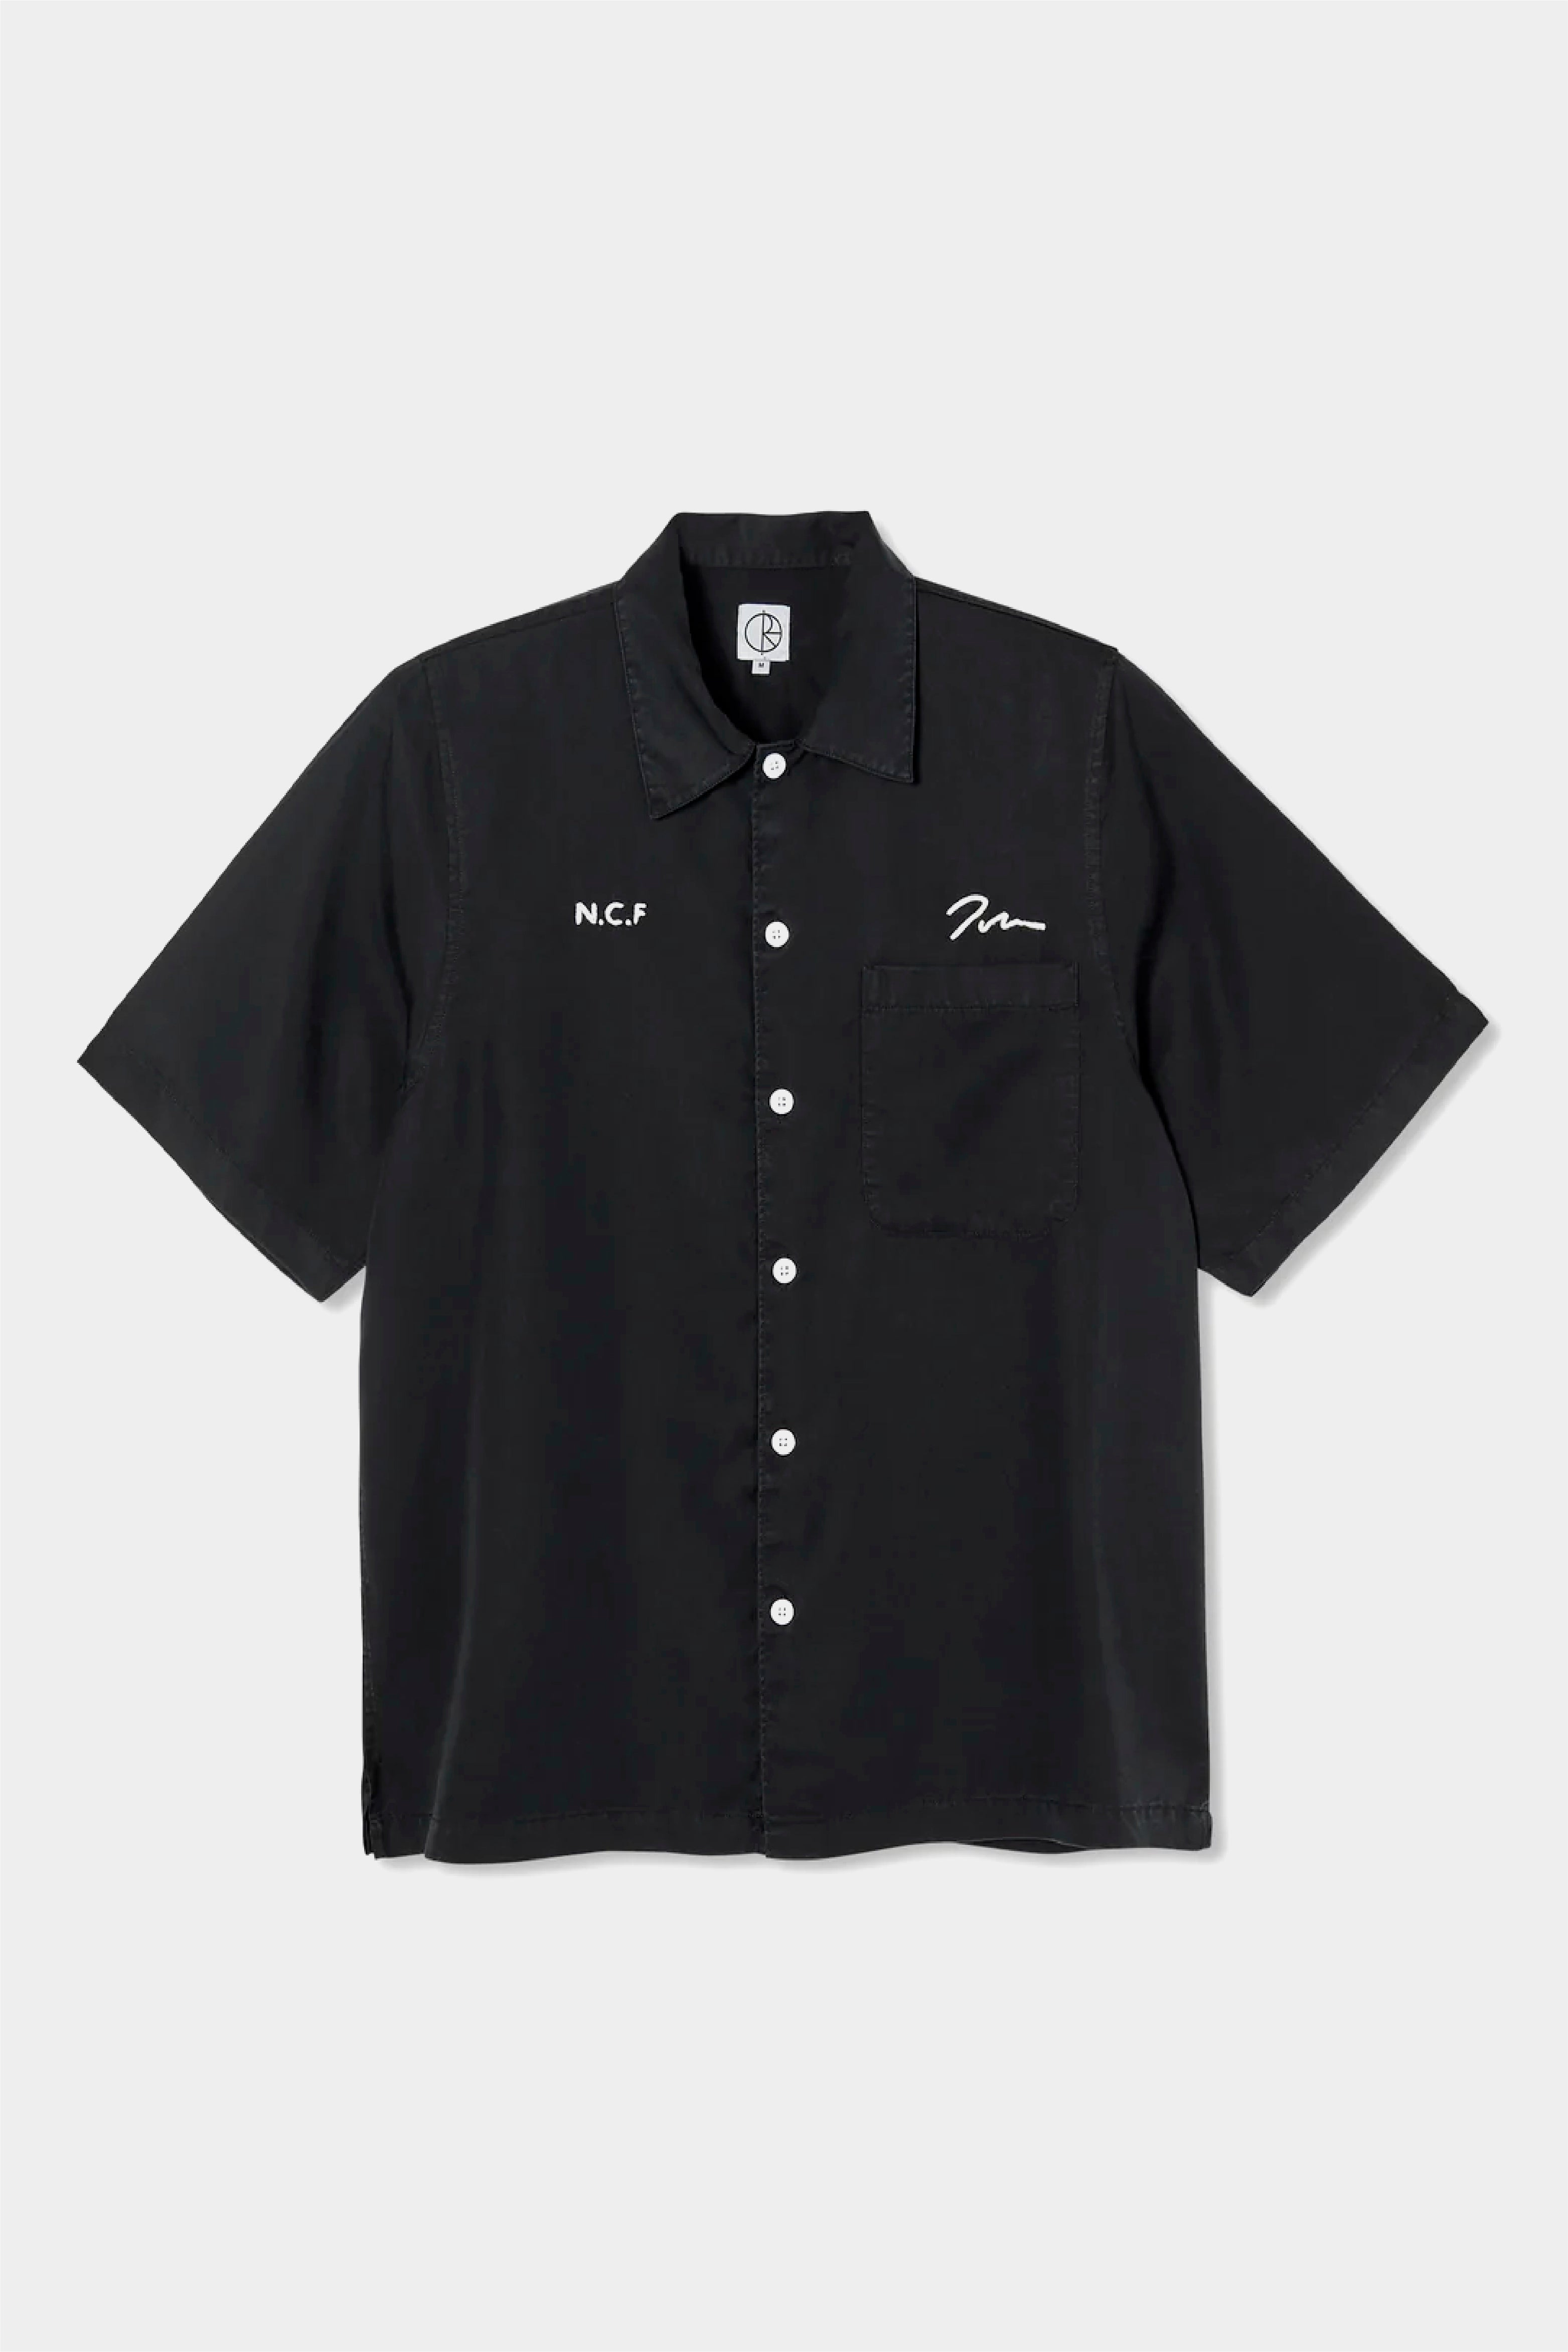 Selectshop FRAME - POLAR SKATE CO. NCF Shirt Shirts Concept Store Dubai